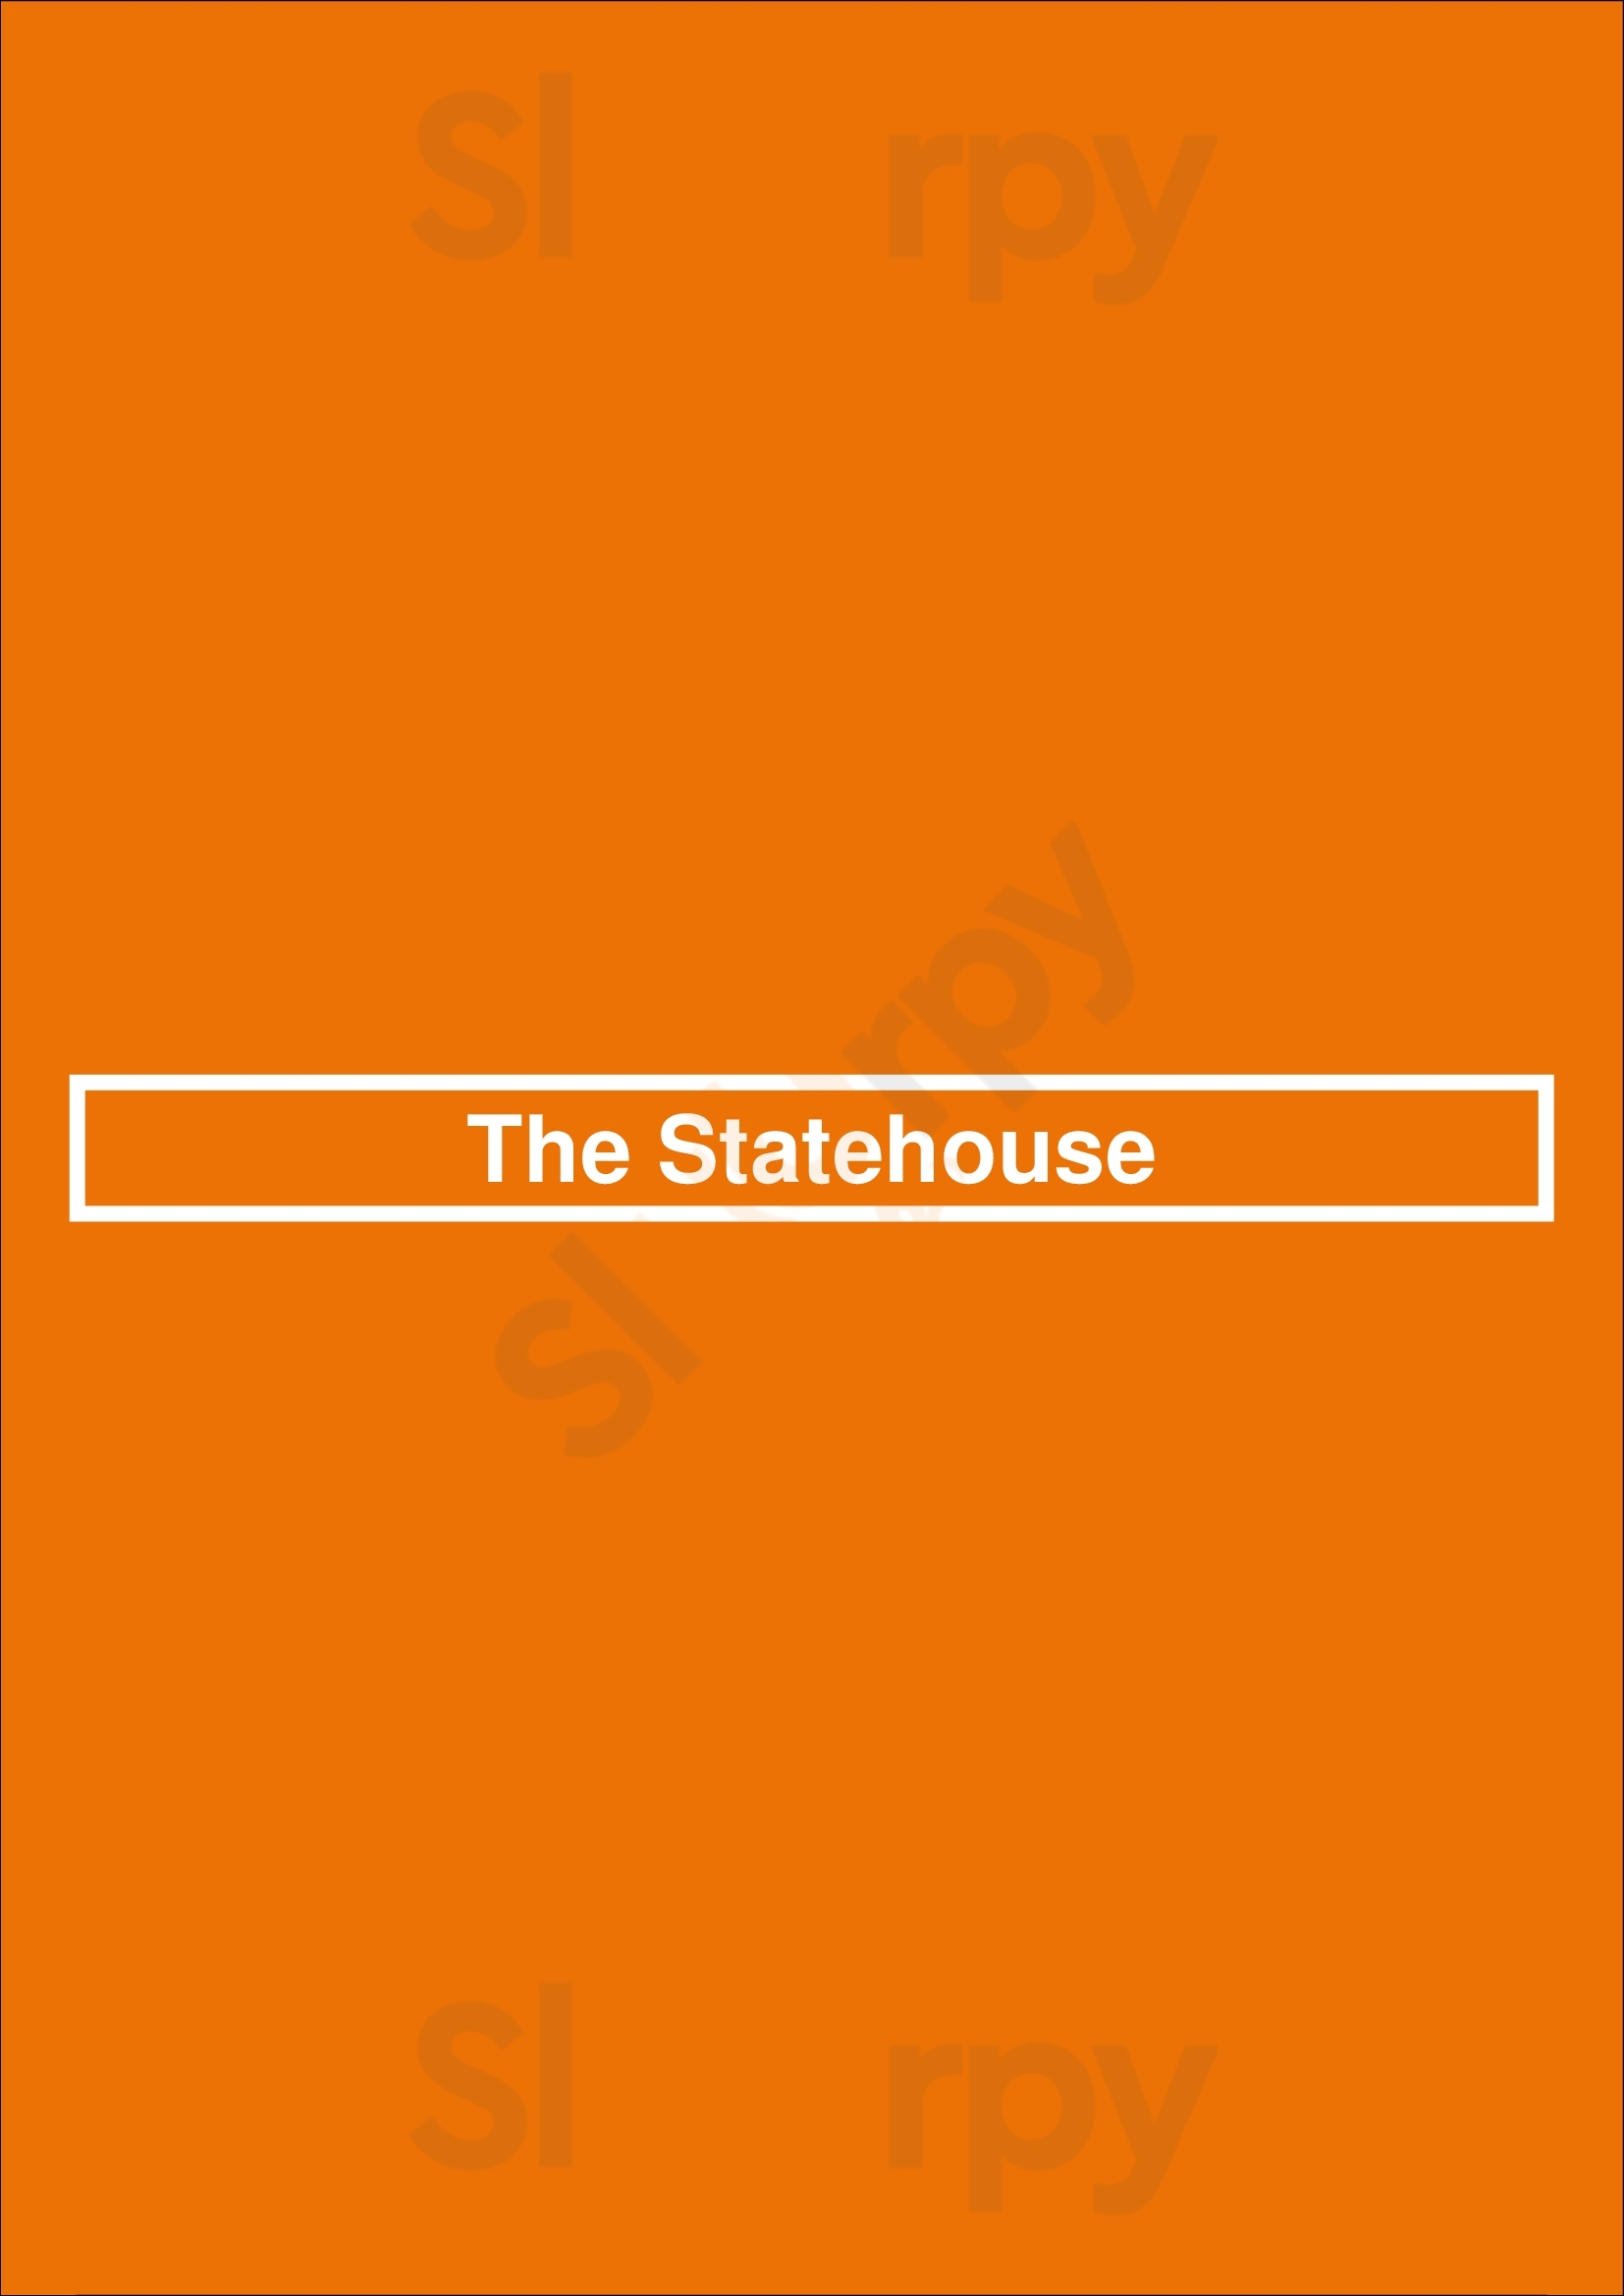 The Statehouse Madison Menu - 1